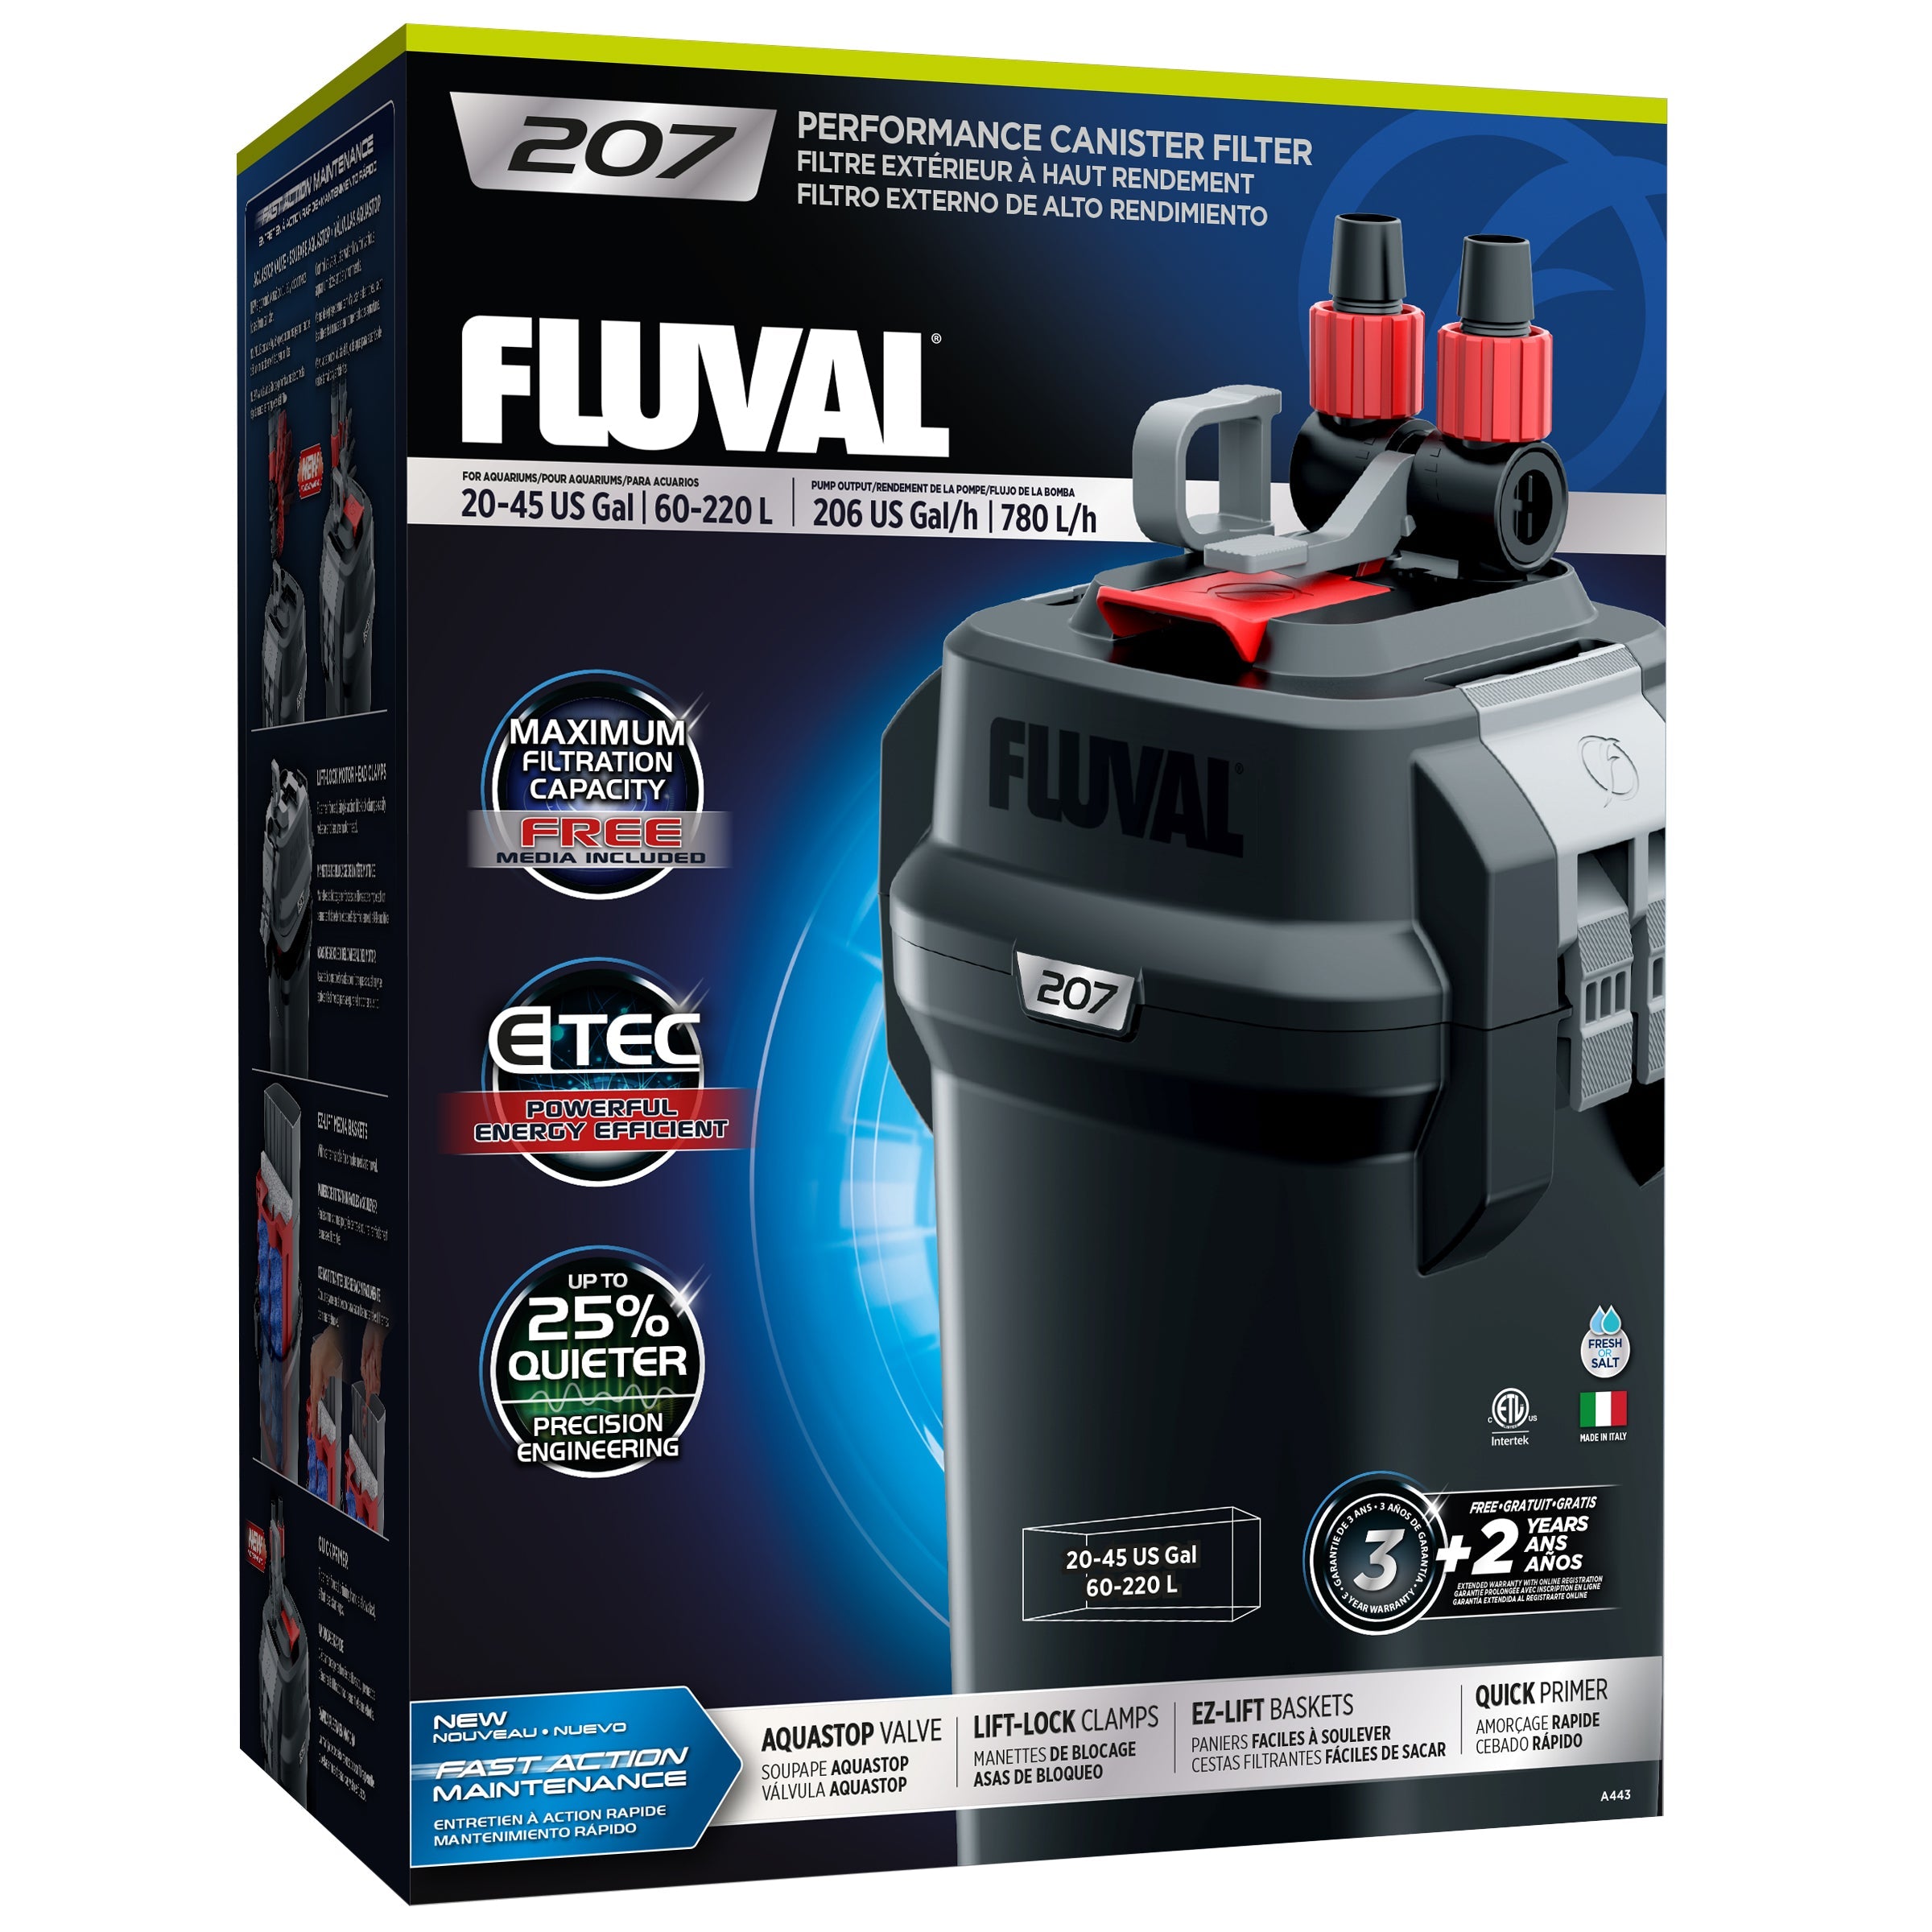 Fluval 207 Performance Canister Filter